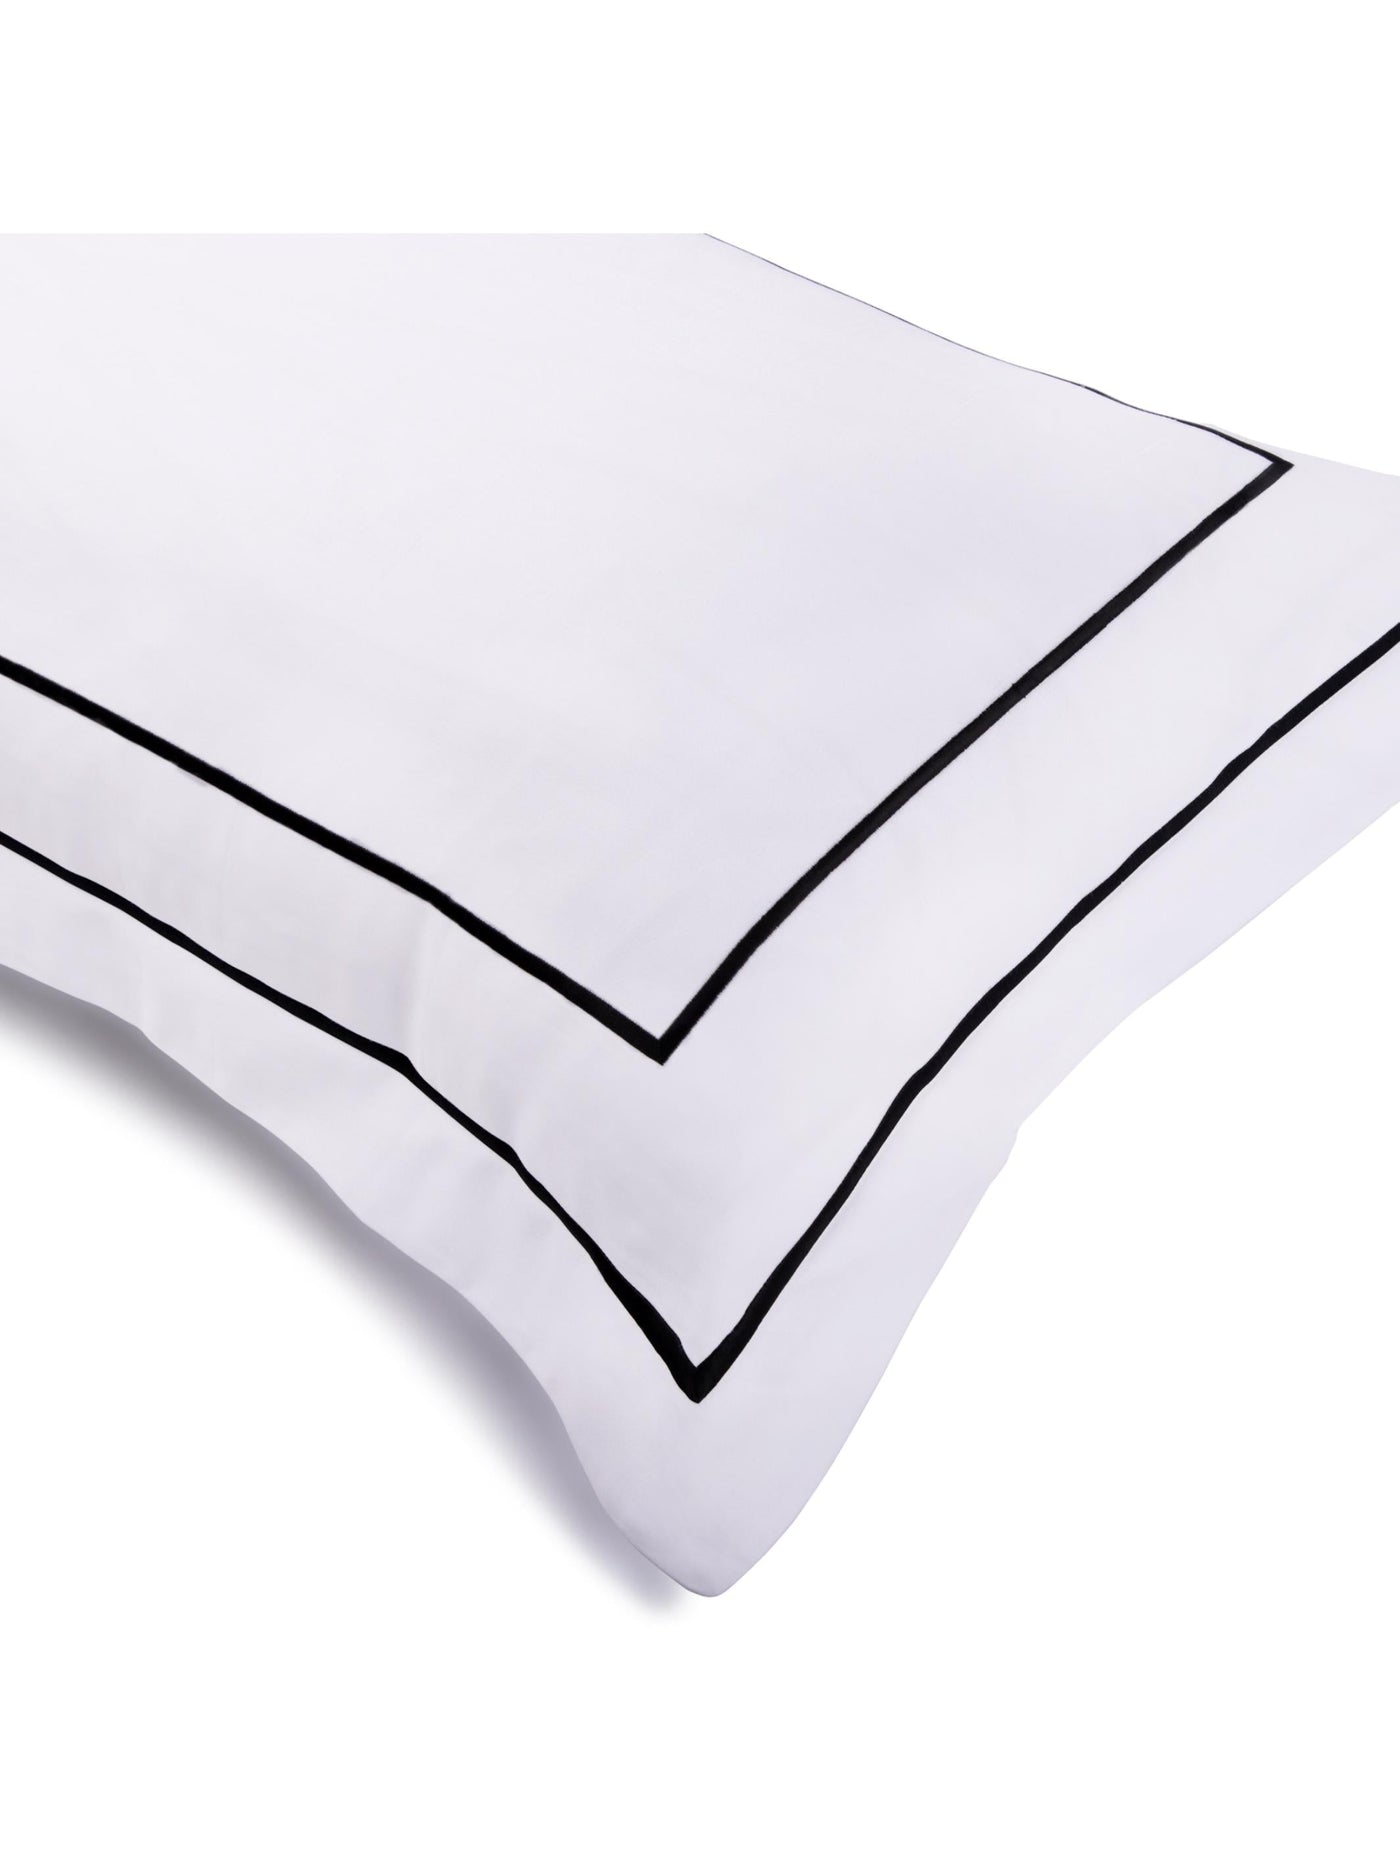 100% Cotton Bedsheet - Classic